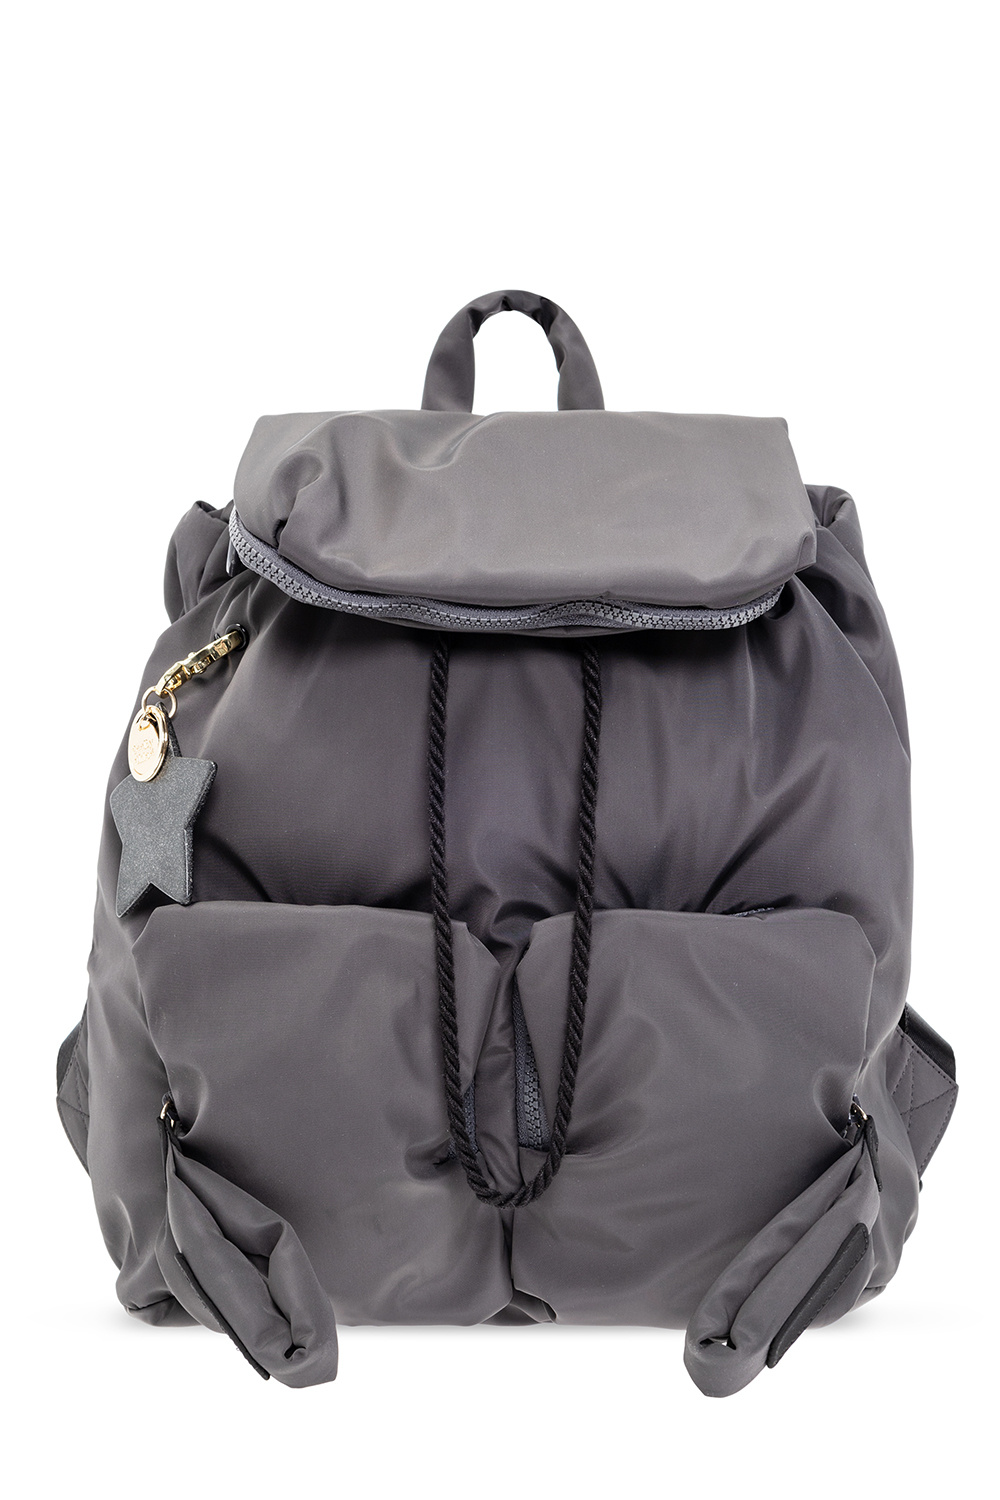 Grey 'Joy Rider' backpack See By Chloé - натуральная ткань czarnej